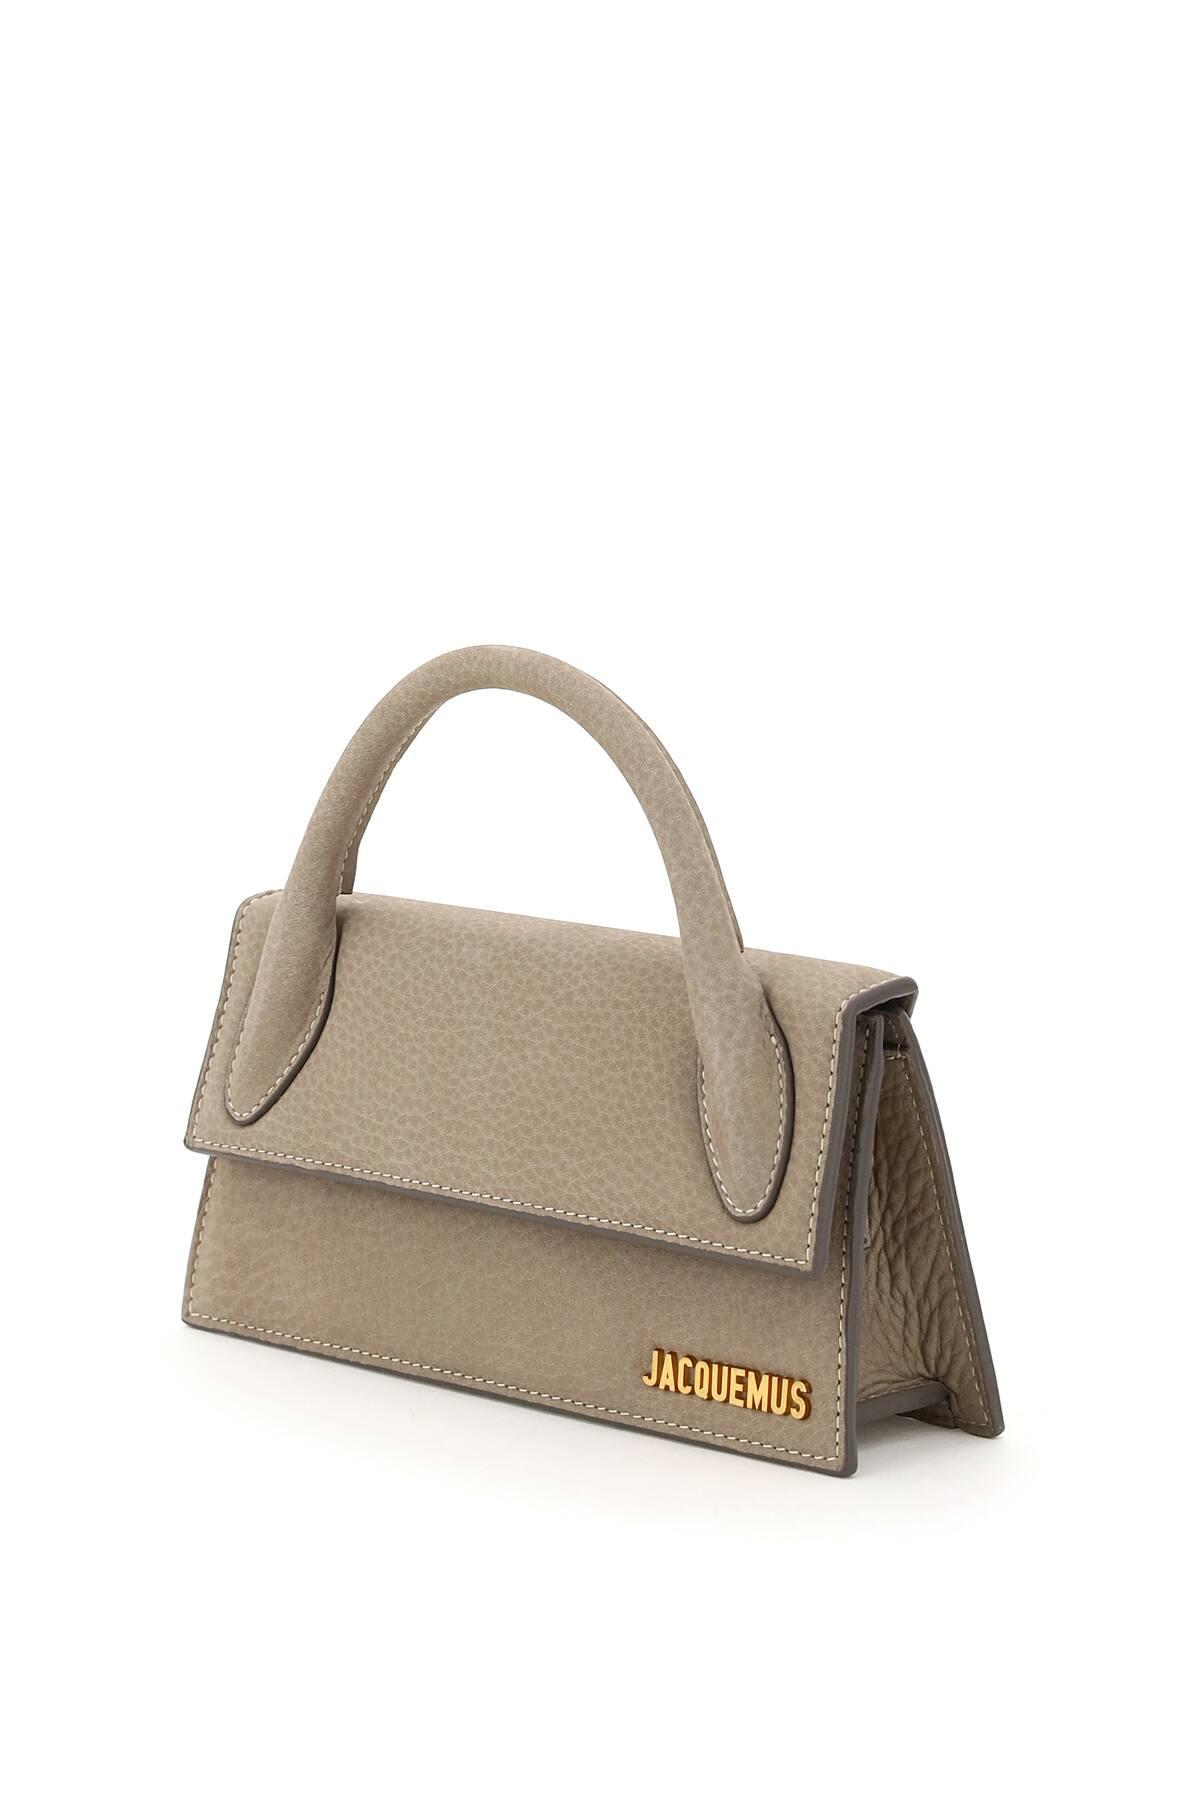 Jacquemus Chiquito Long Leather Handbag